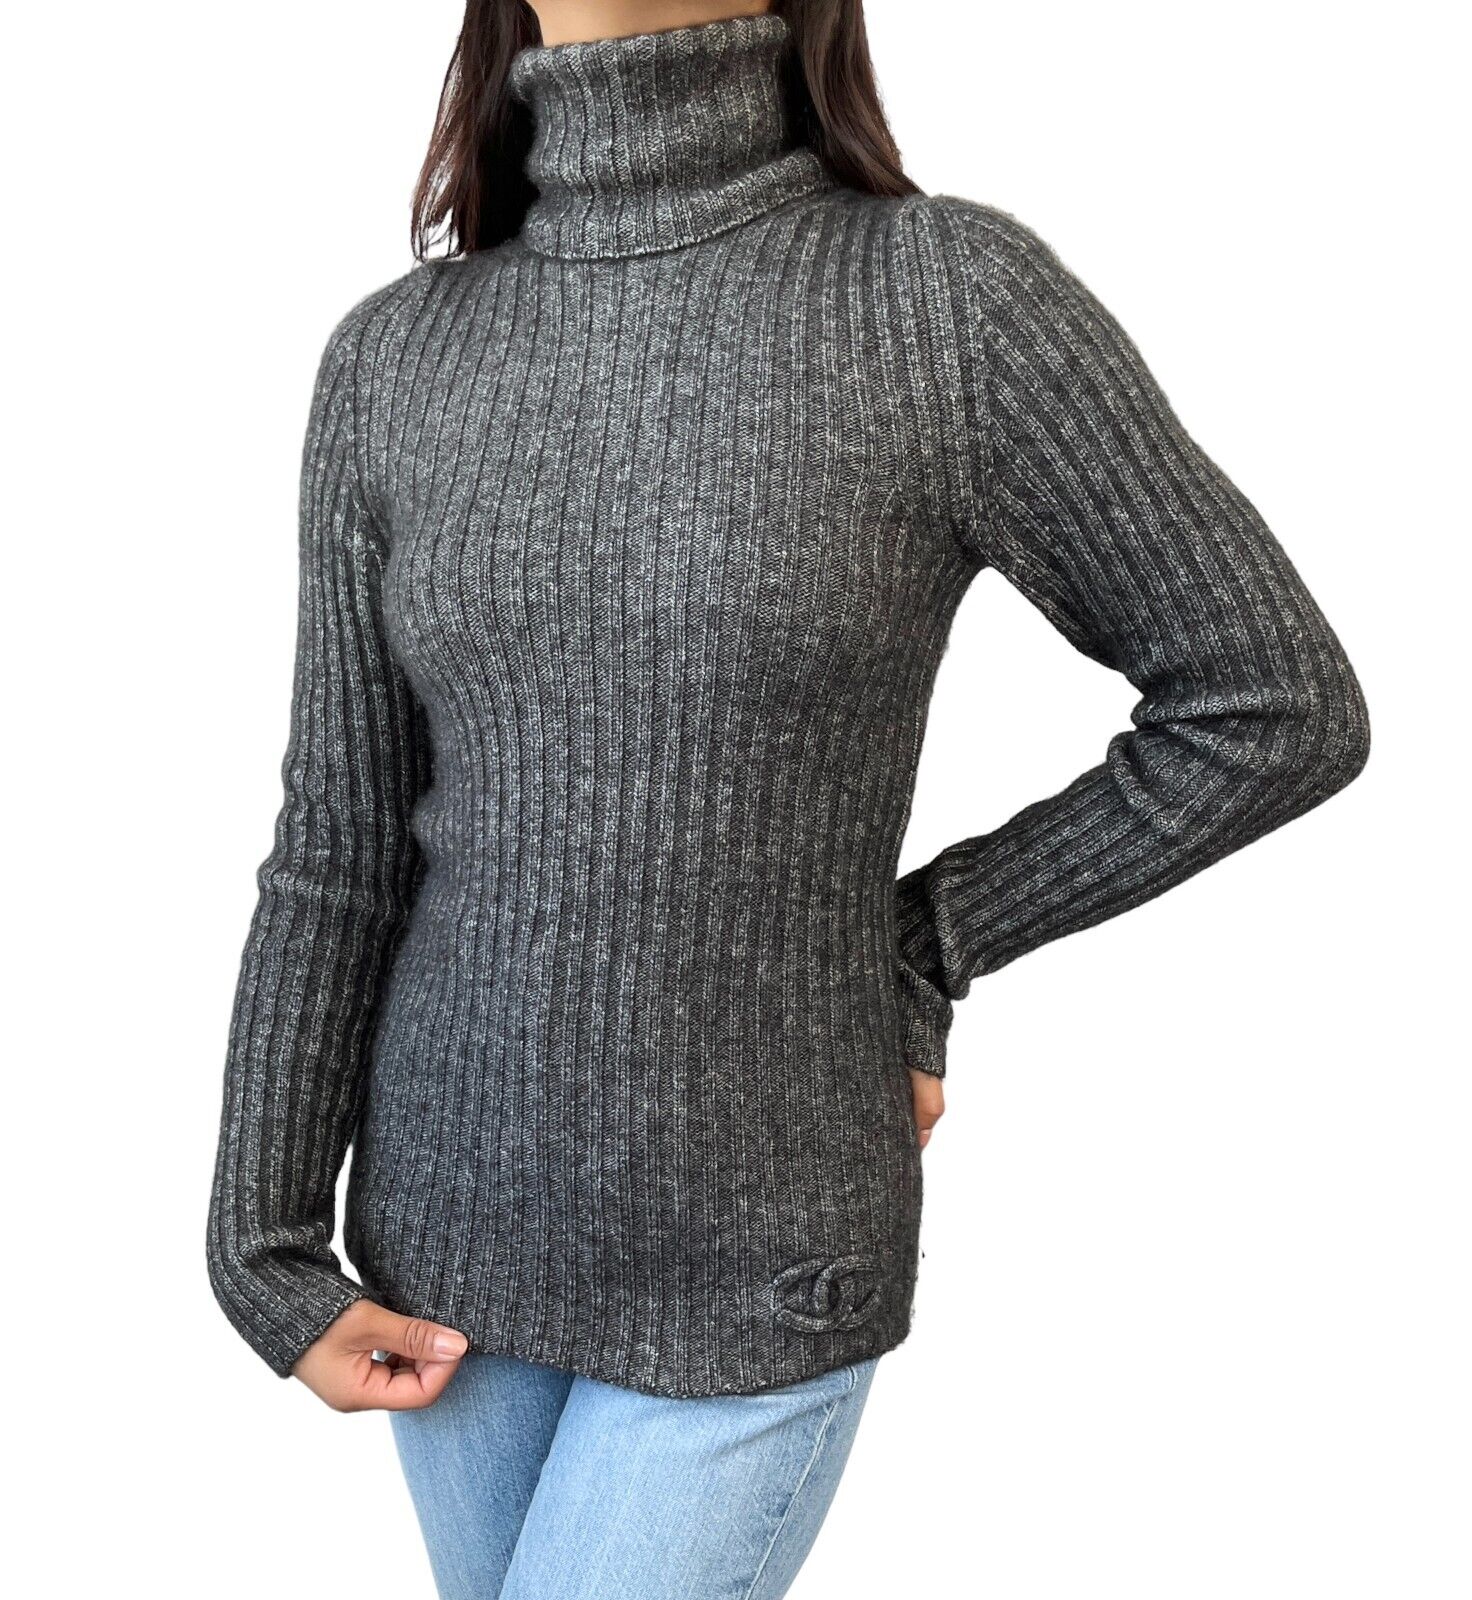 CHANEL Vintage P44578 CC Mark Turtleneck Sweater Top #36 Gray Cashmere RankAB+